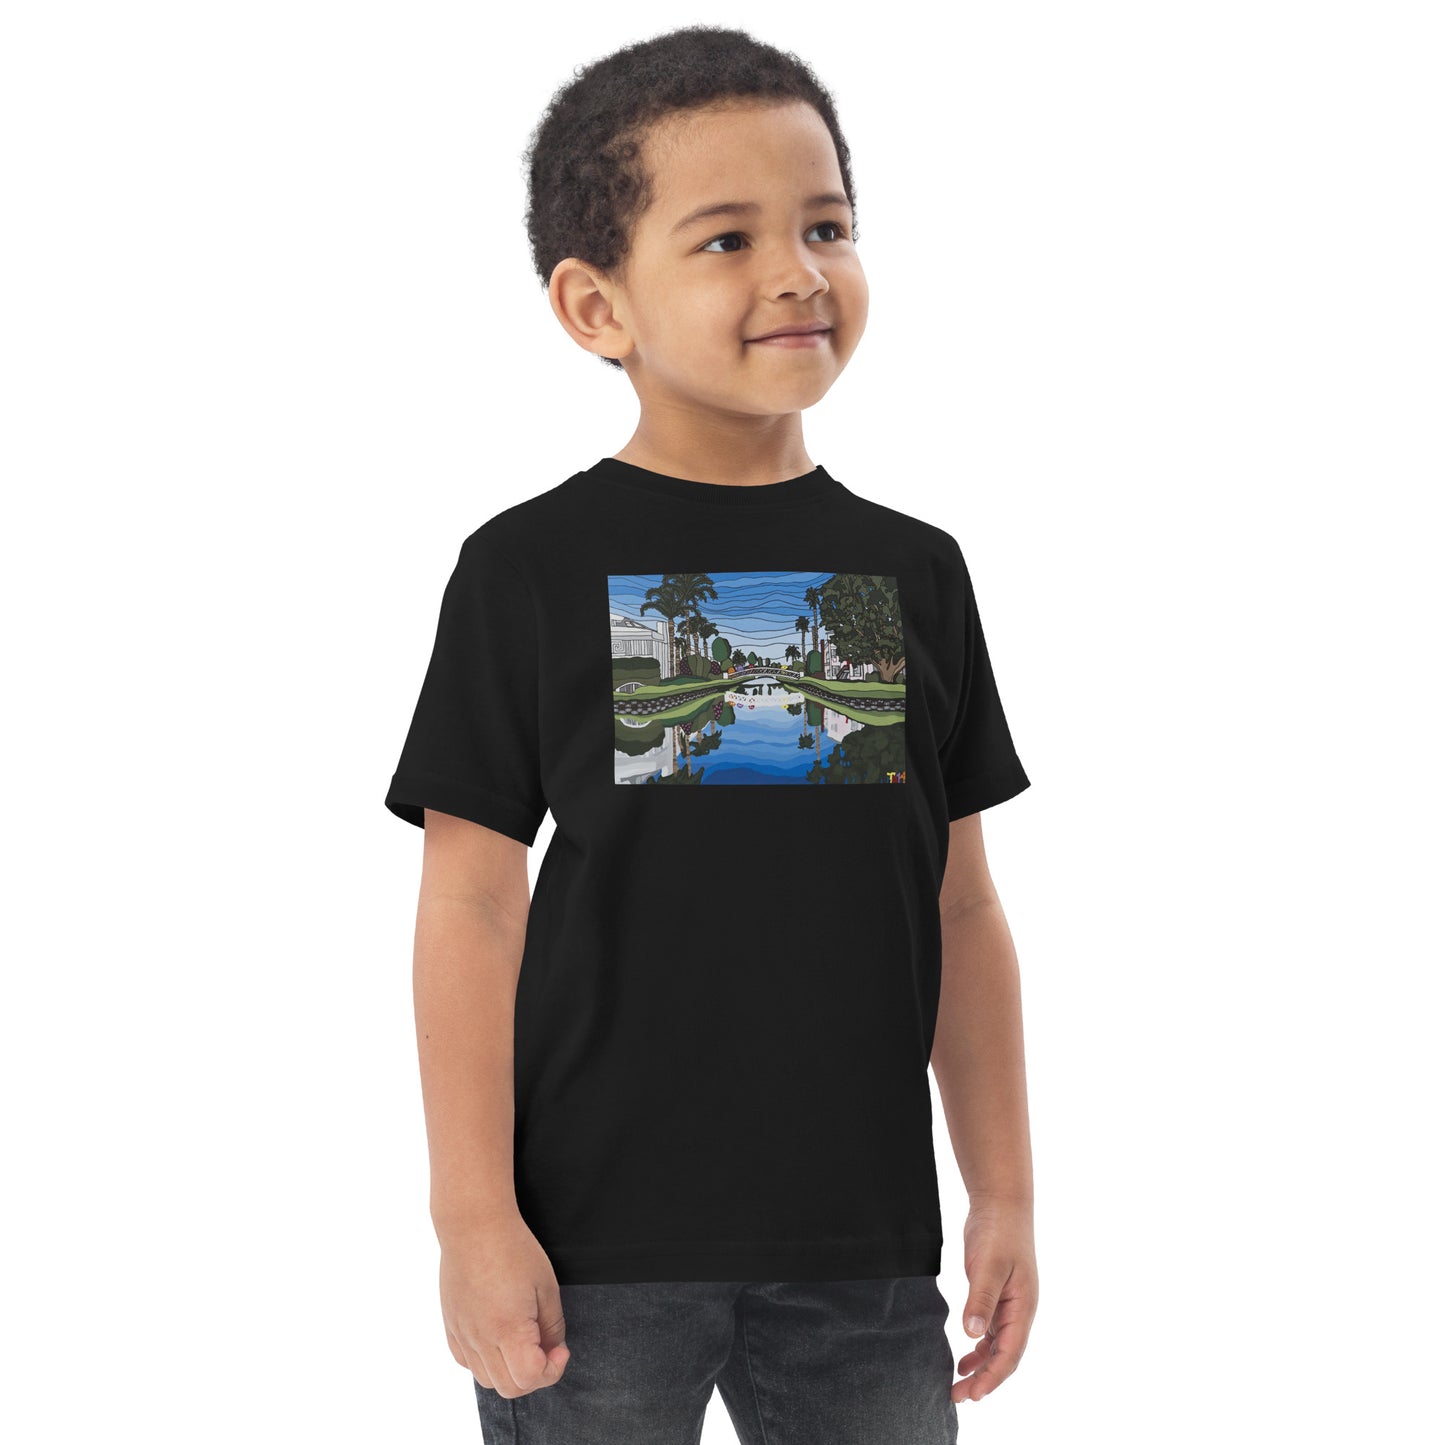 Venice Canals 1 - Toddler jersey t-shirt